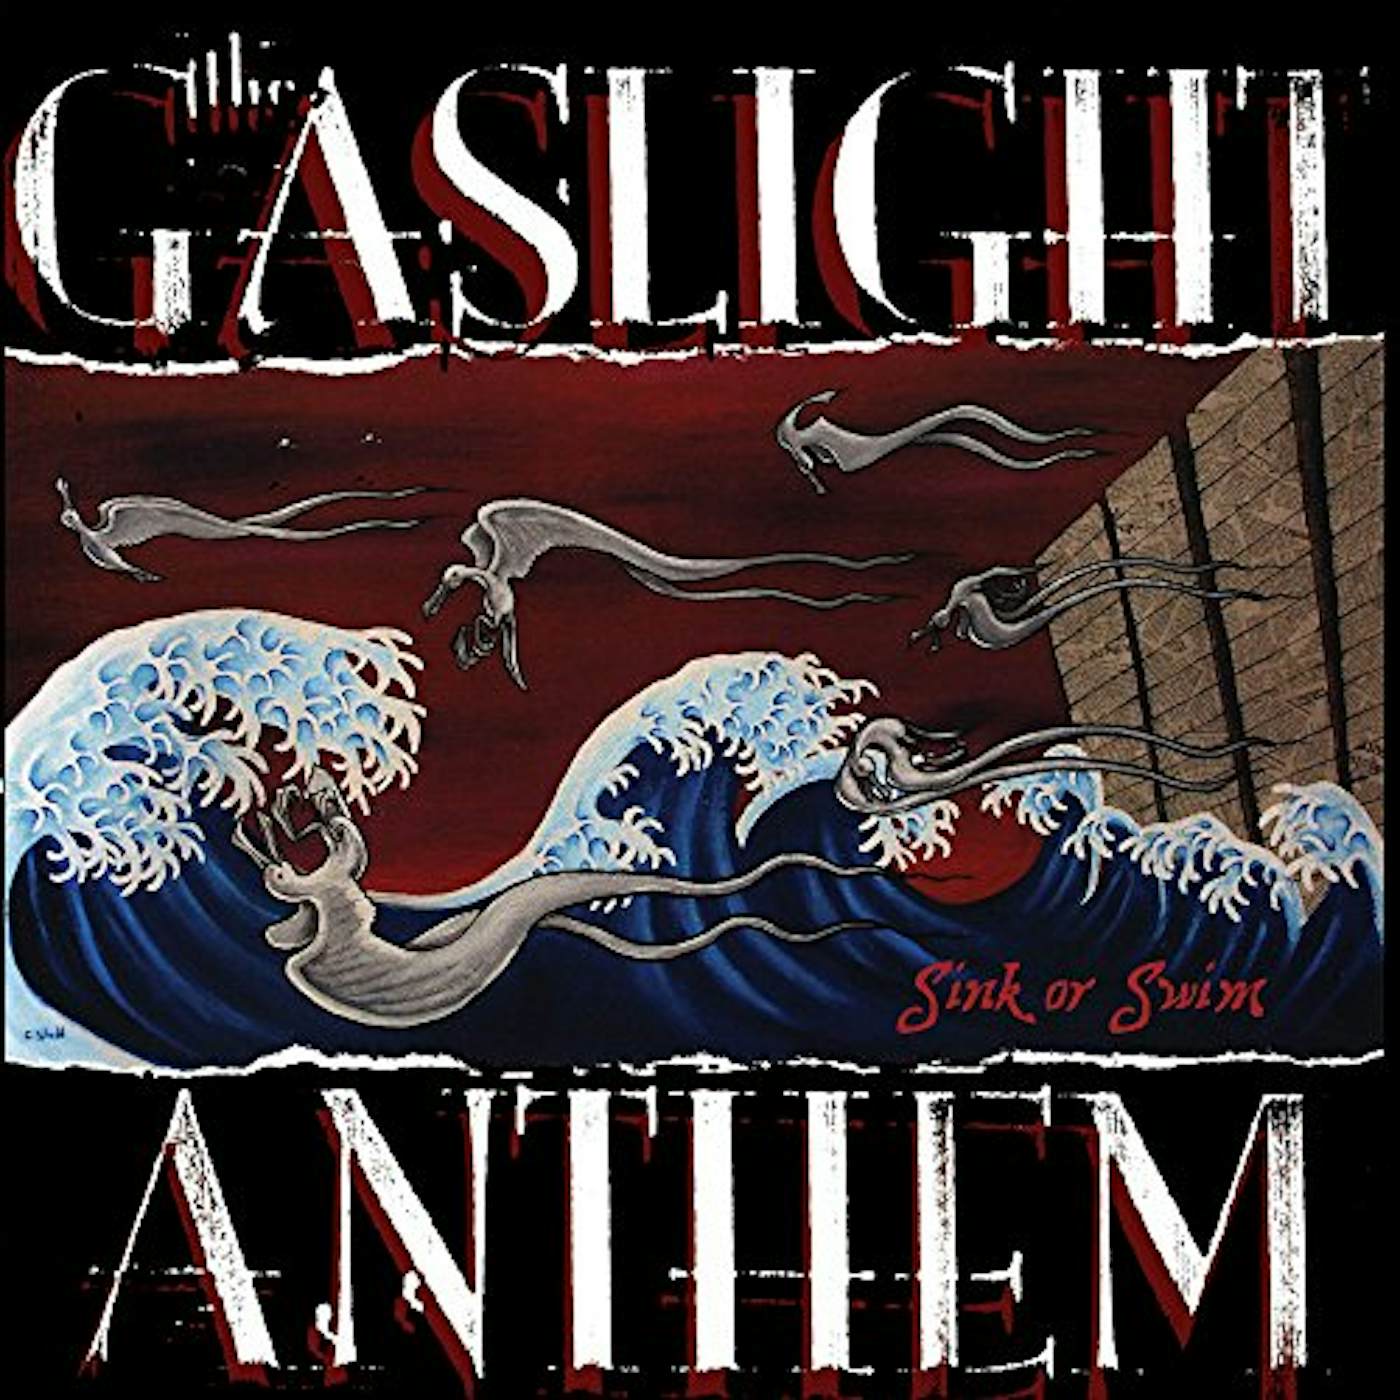 The Gaslight Anthem Sink or Swim Vinyl Record